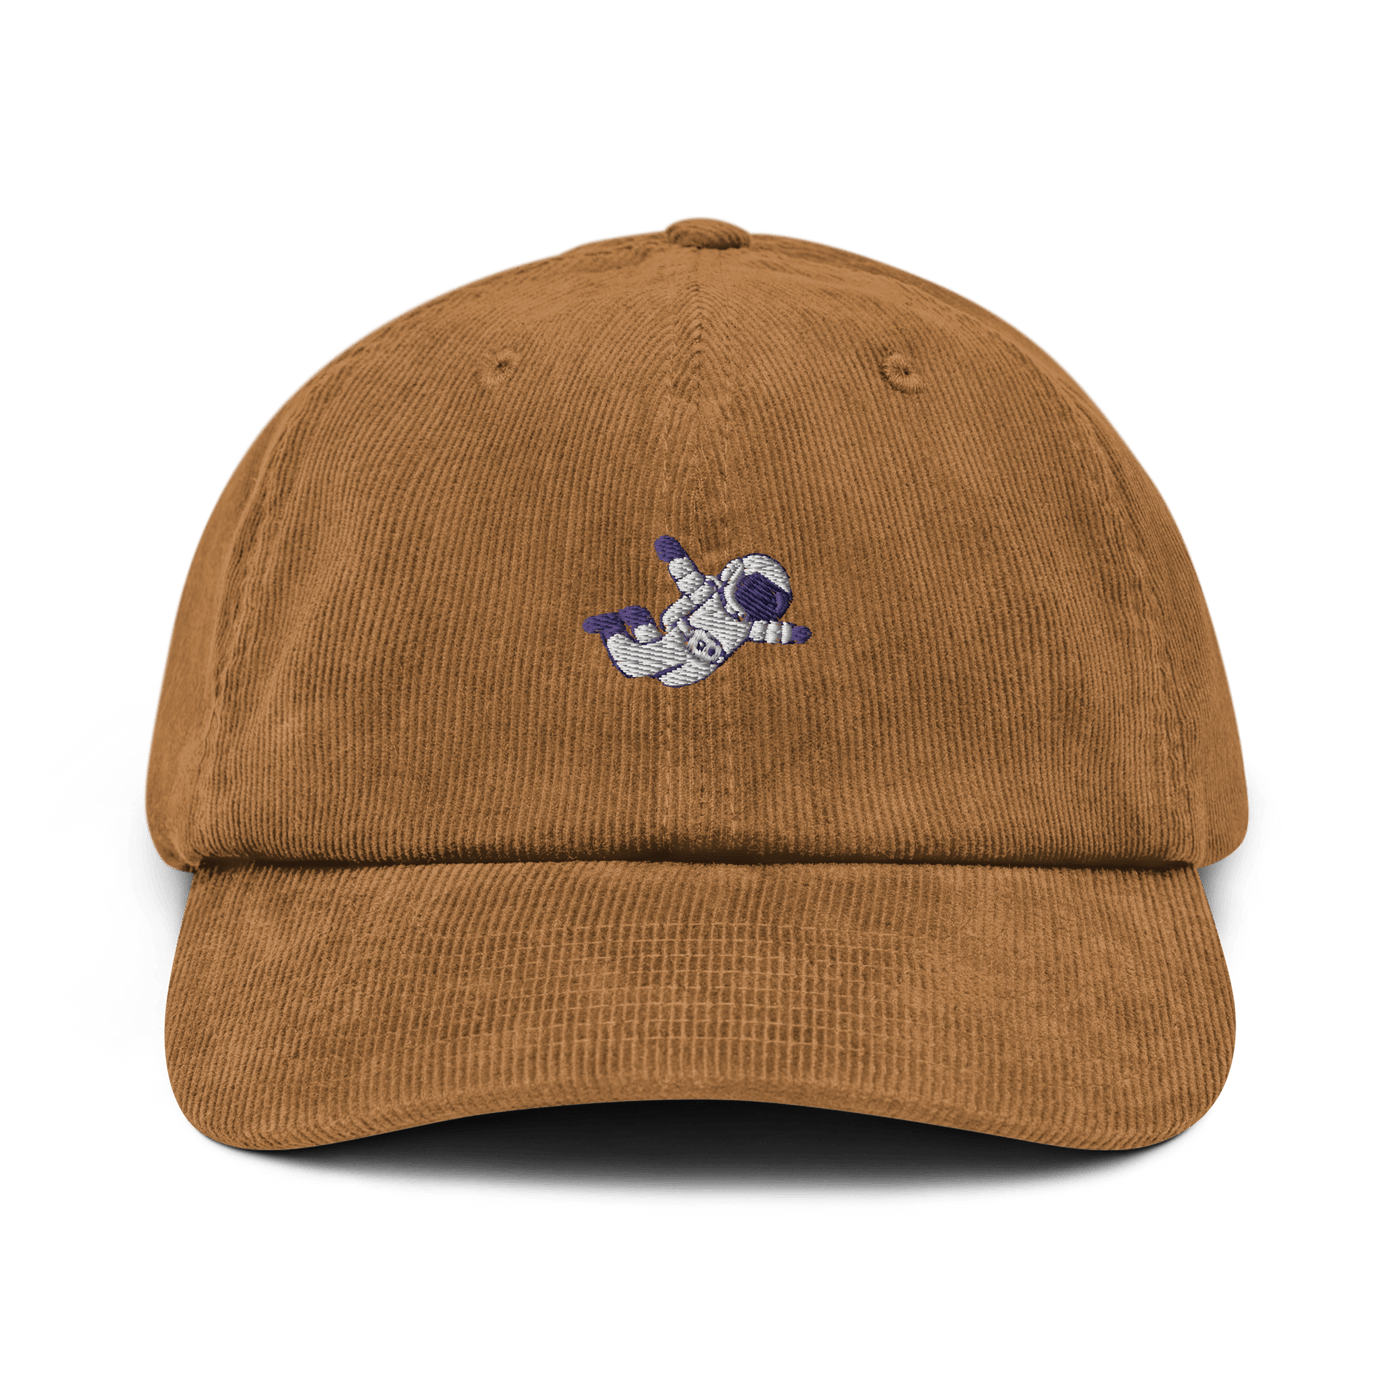 Astronaut Corduroy hat - Camel - - Just Another Cap Store